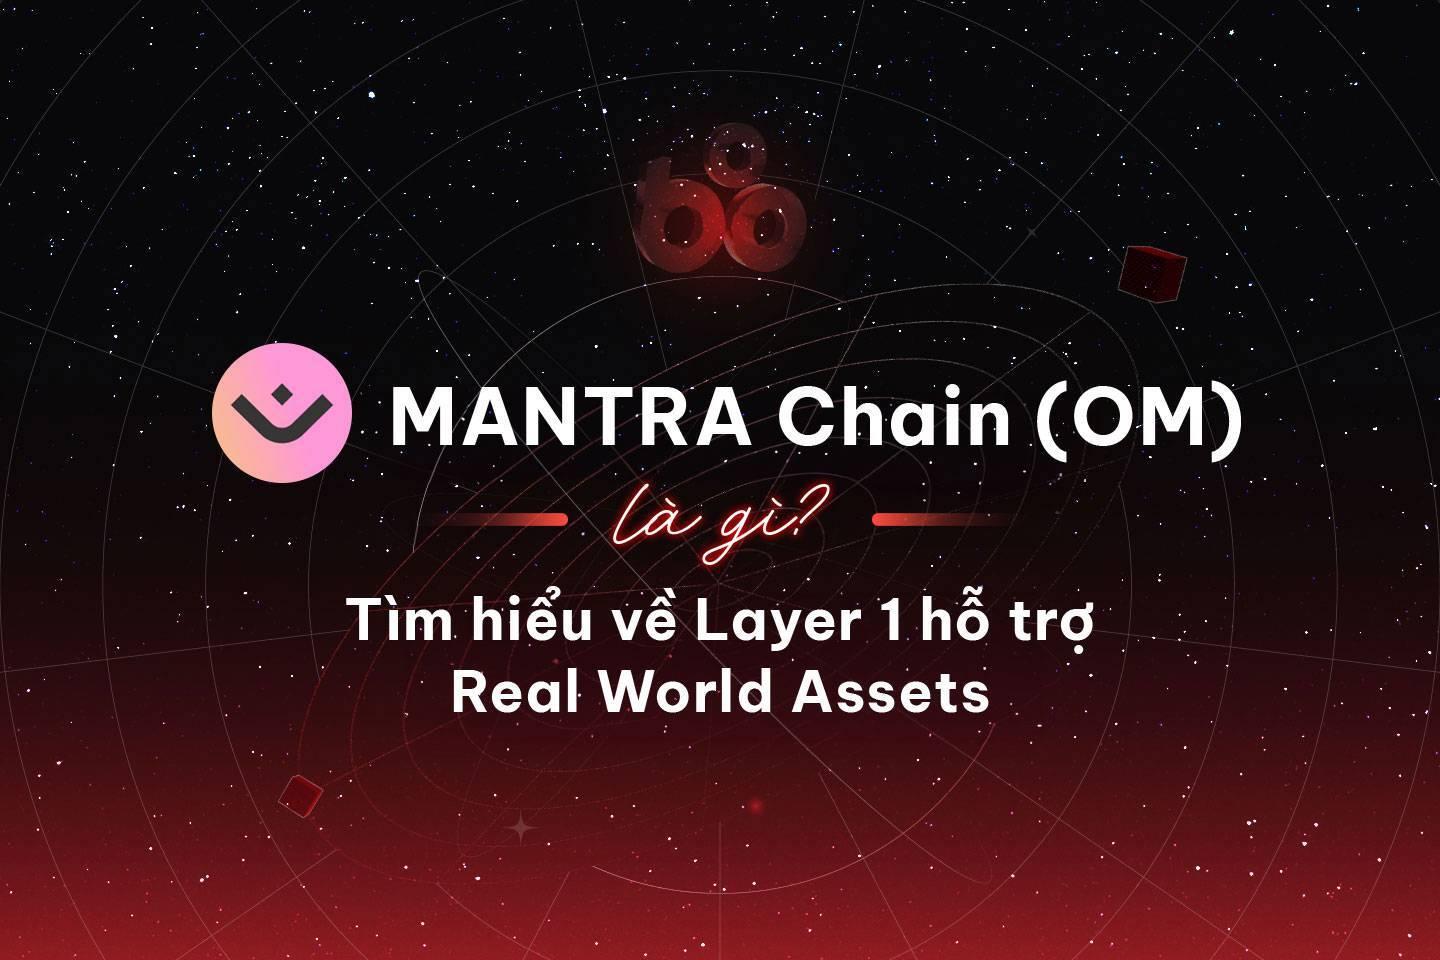 mantra-chain-om-la-gi-tim-hieu-ve-layer-1-ho-tro-real-world-assets